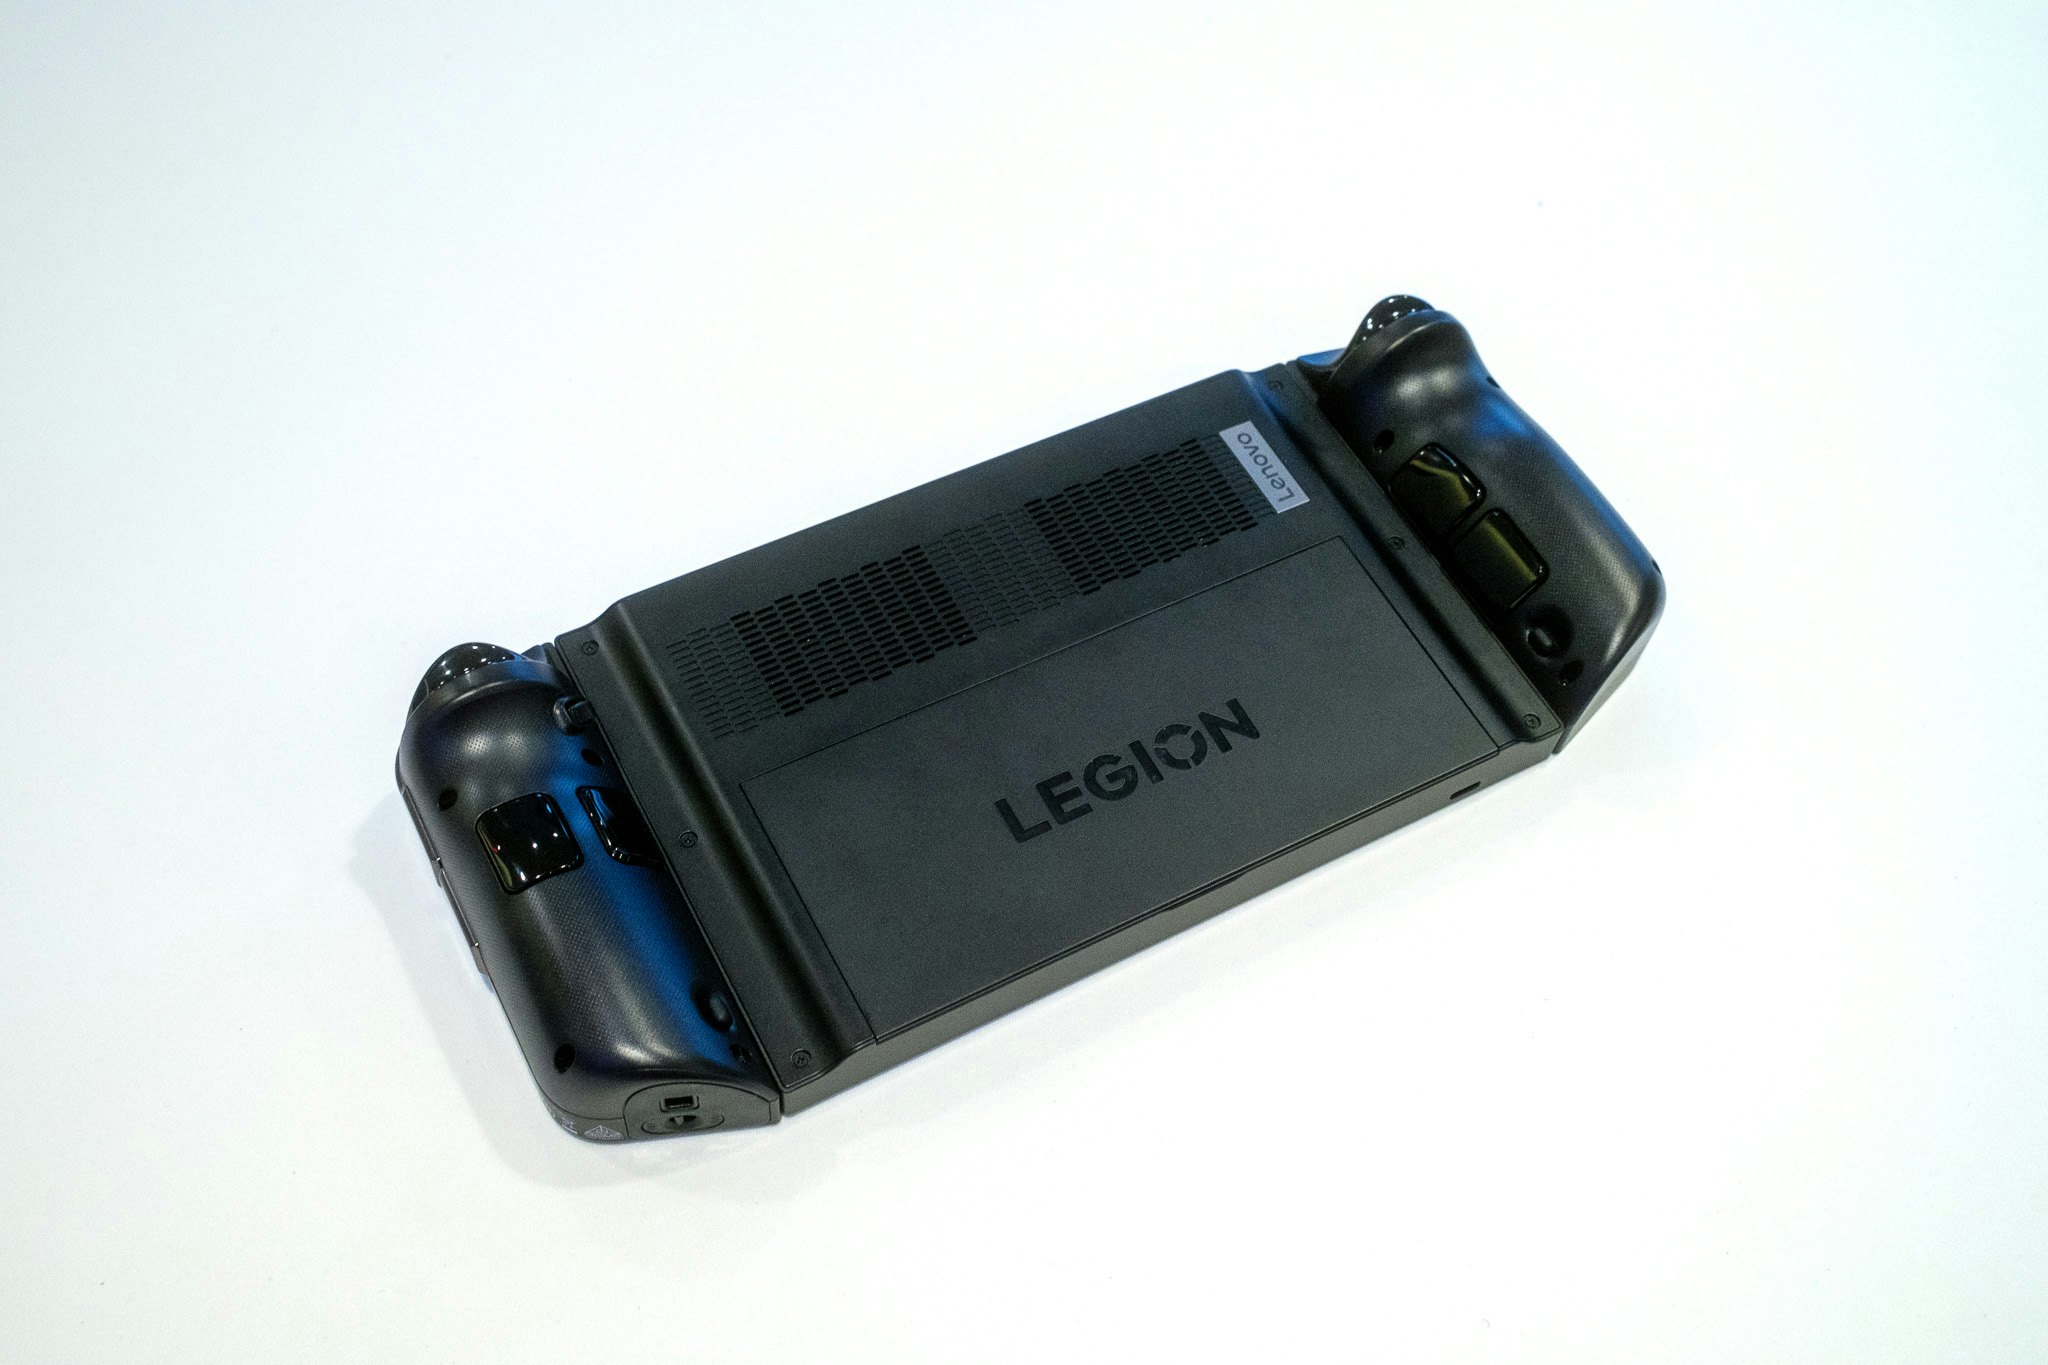 Lenovo's Legion Go is an iPad mini-sized portable PC with detachable  controllers